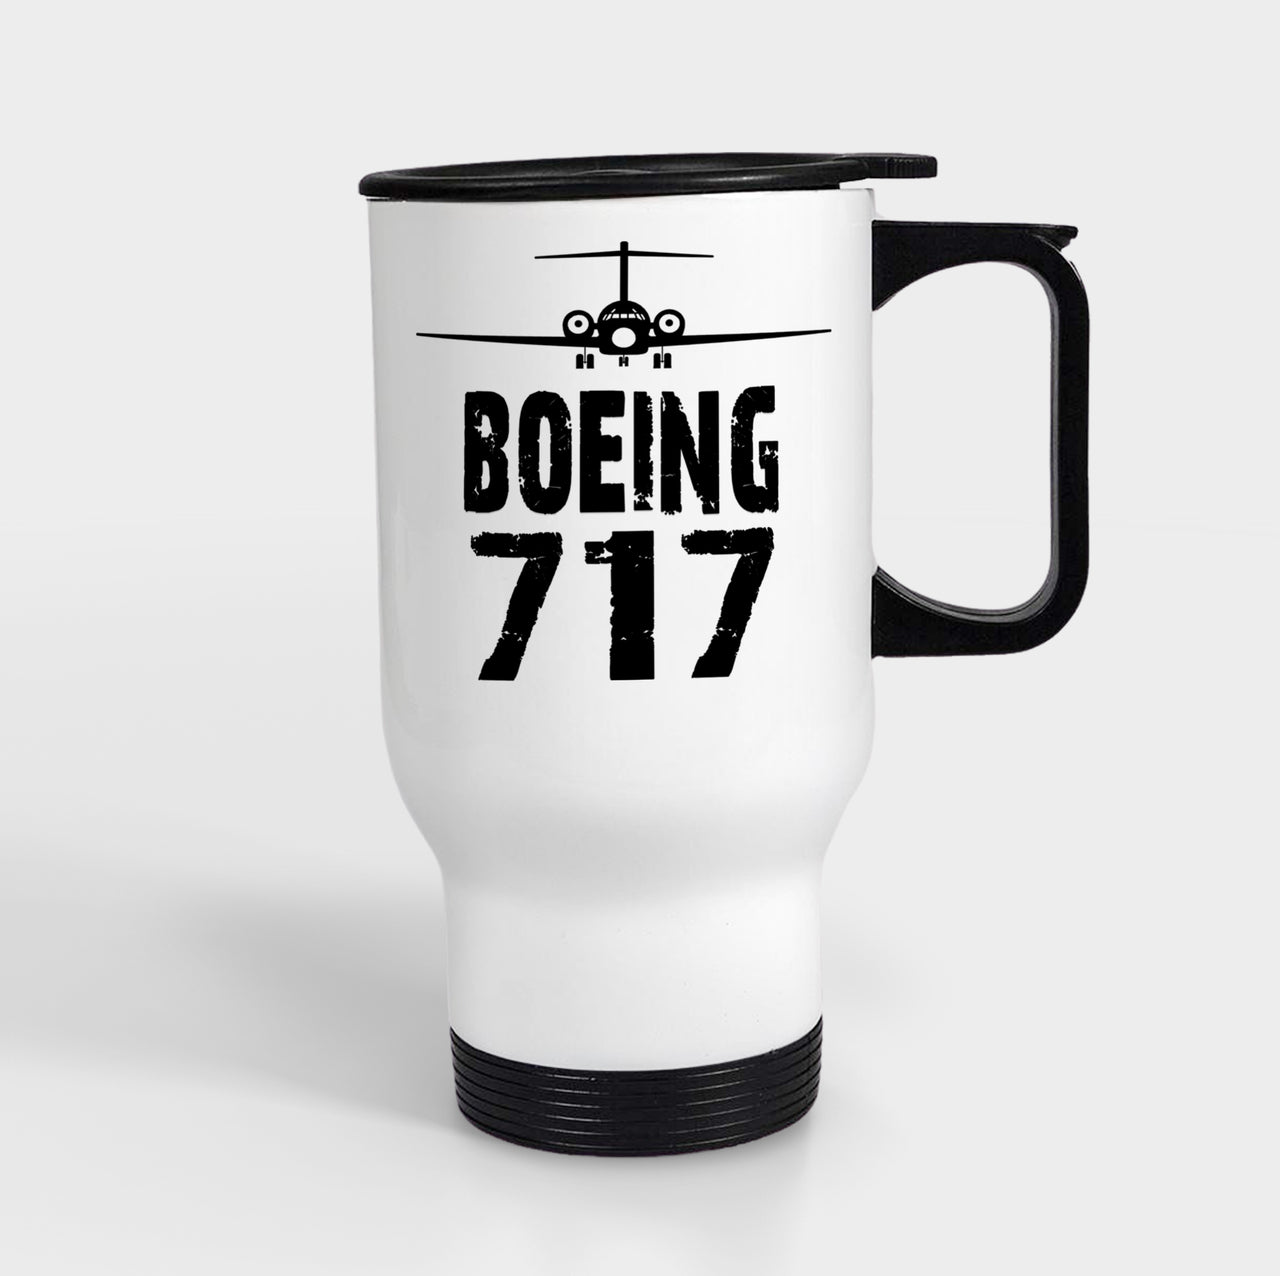 Boeing 717 & Plane Designed Travel Mugs (With Holder)